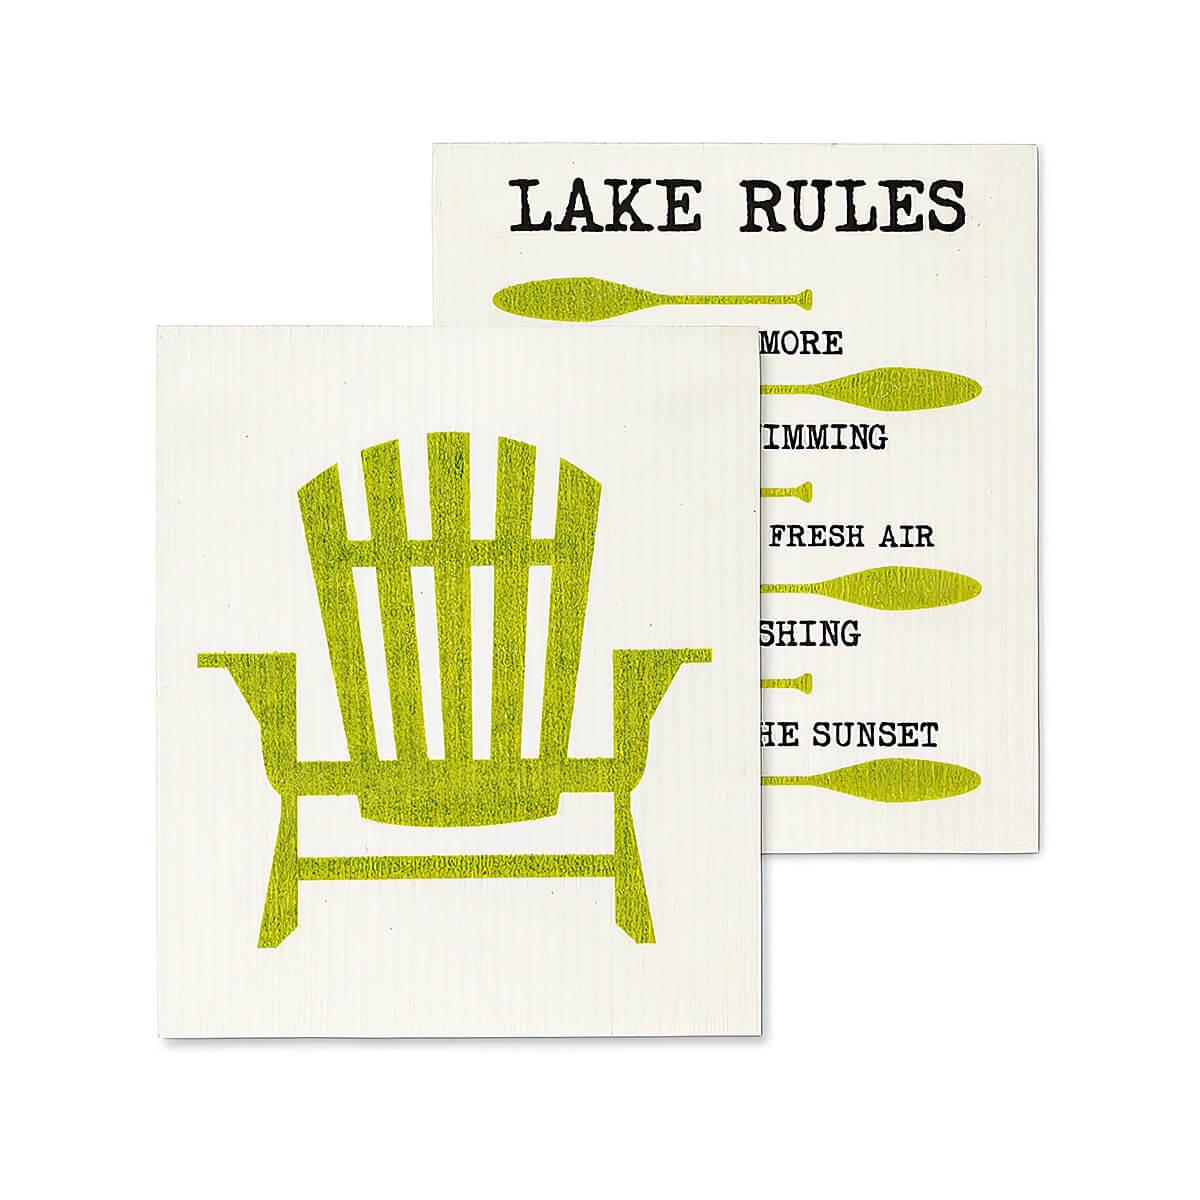  Swedish Chair Rules Dishcloths - 2 Pack